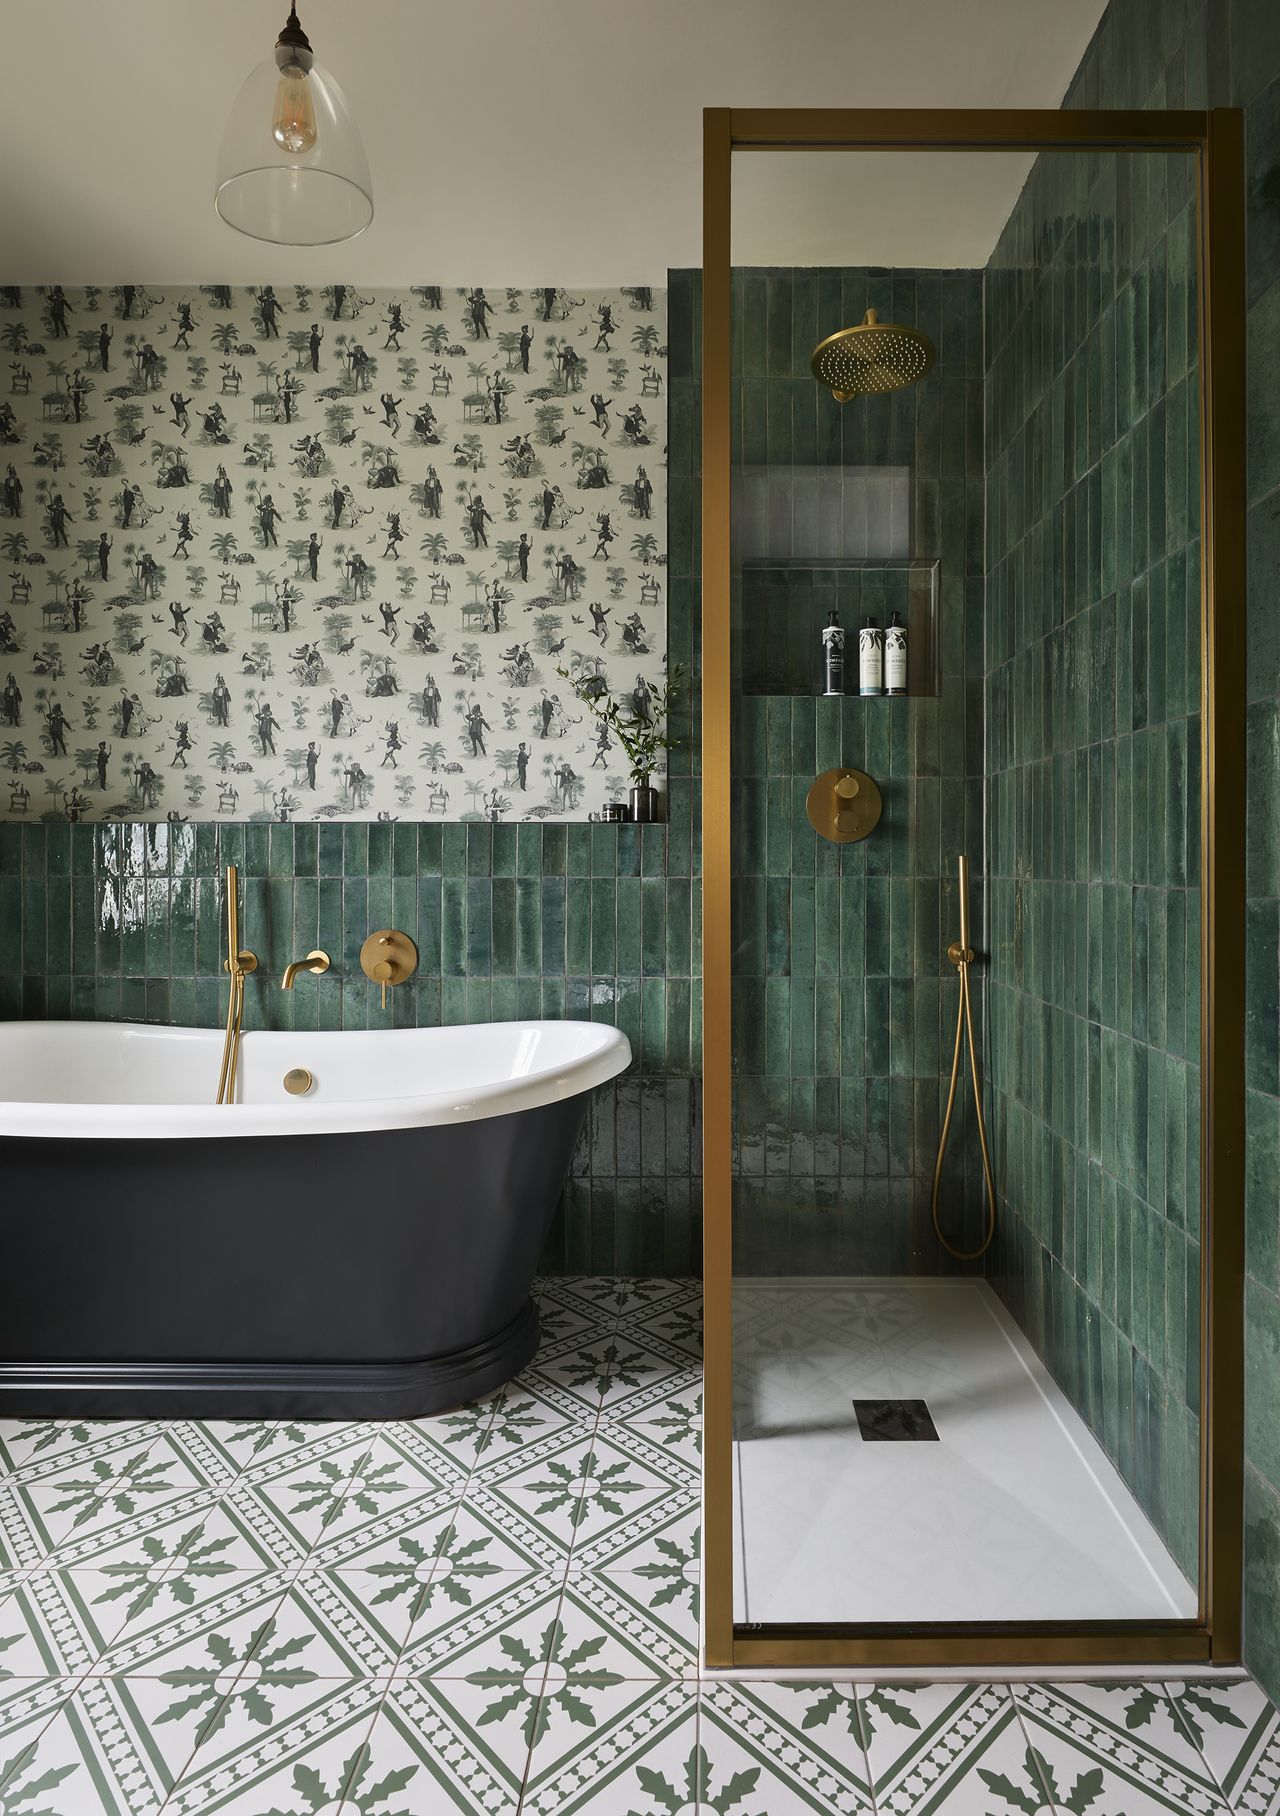 Traditional bathroom ideas: 22 timeless styles & classic decor